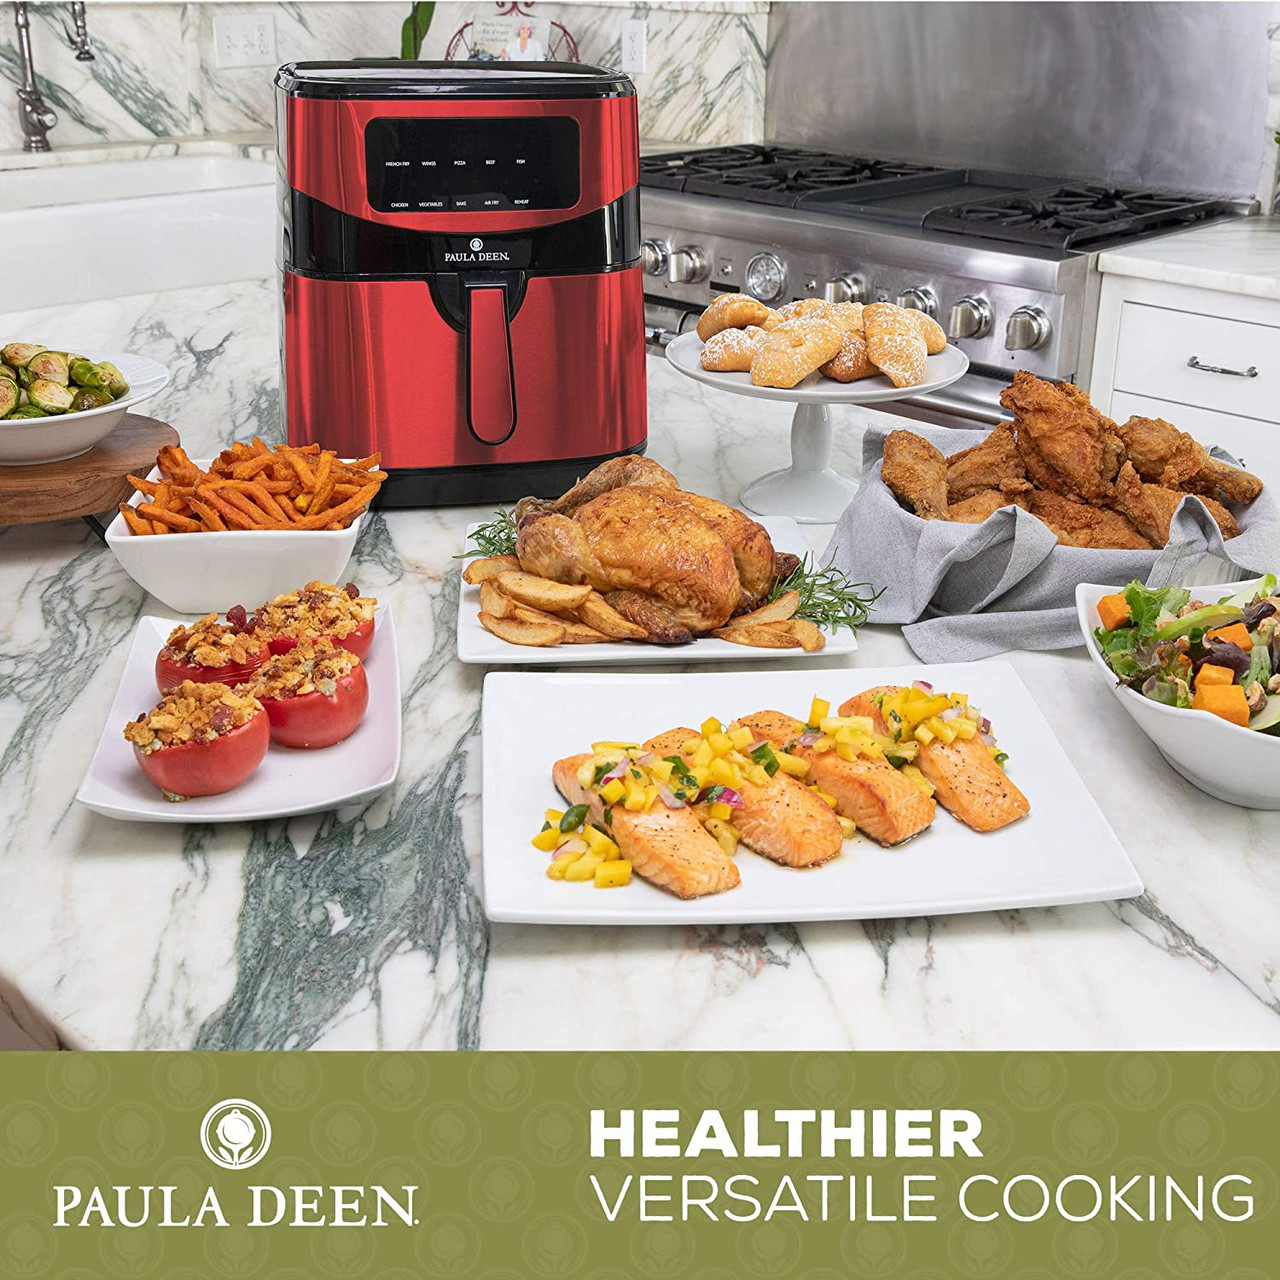 Paula Deen HF-9001D Family Size Air Fryer Review - Consumer Reports